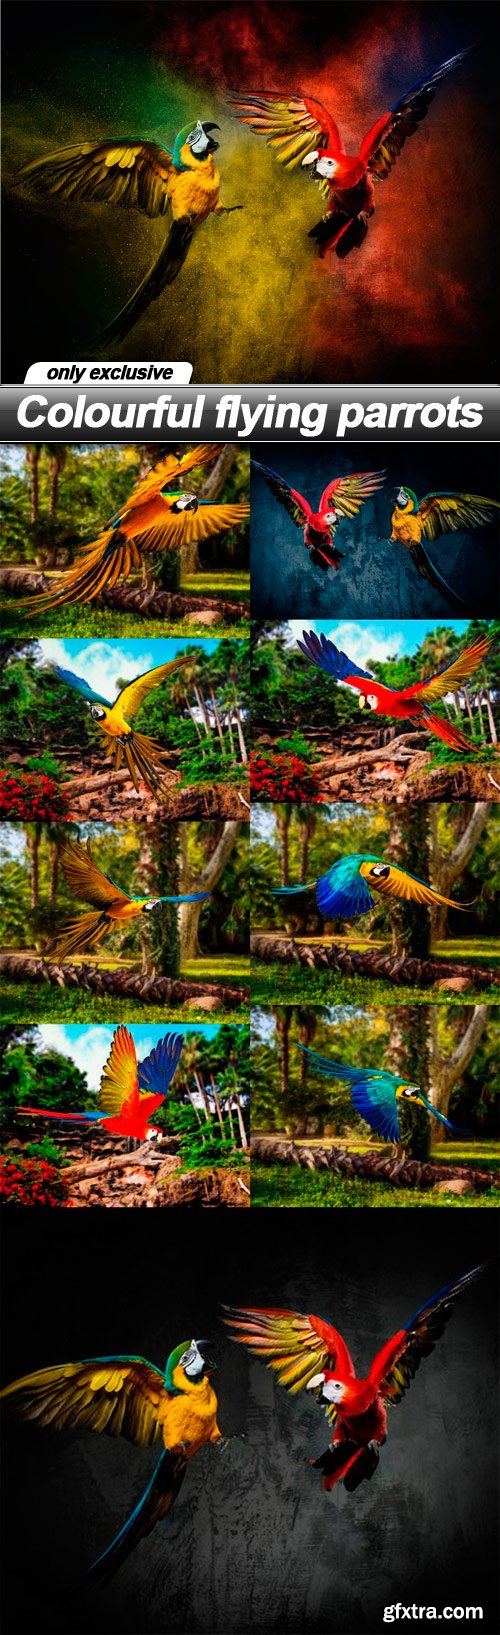 Colourful flying parrots - 10 UHQ JPEG